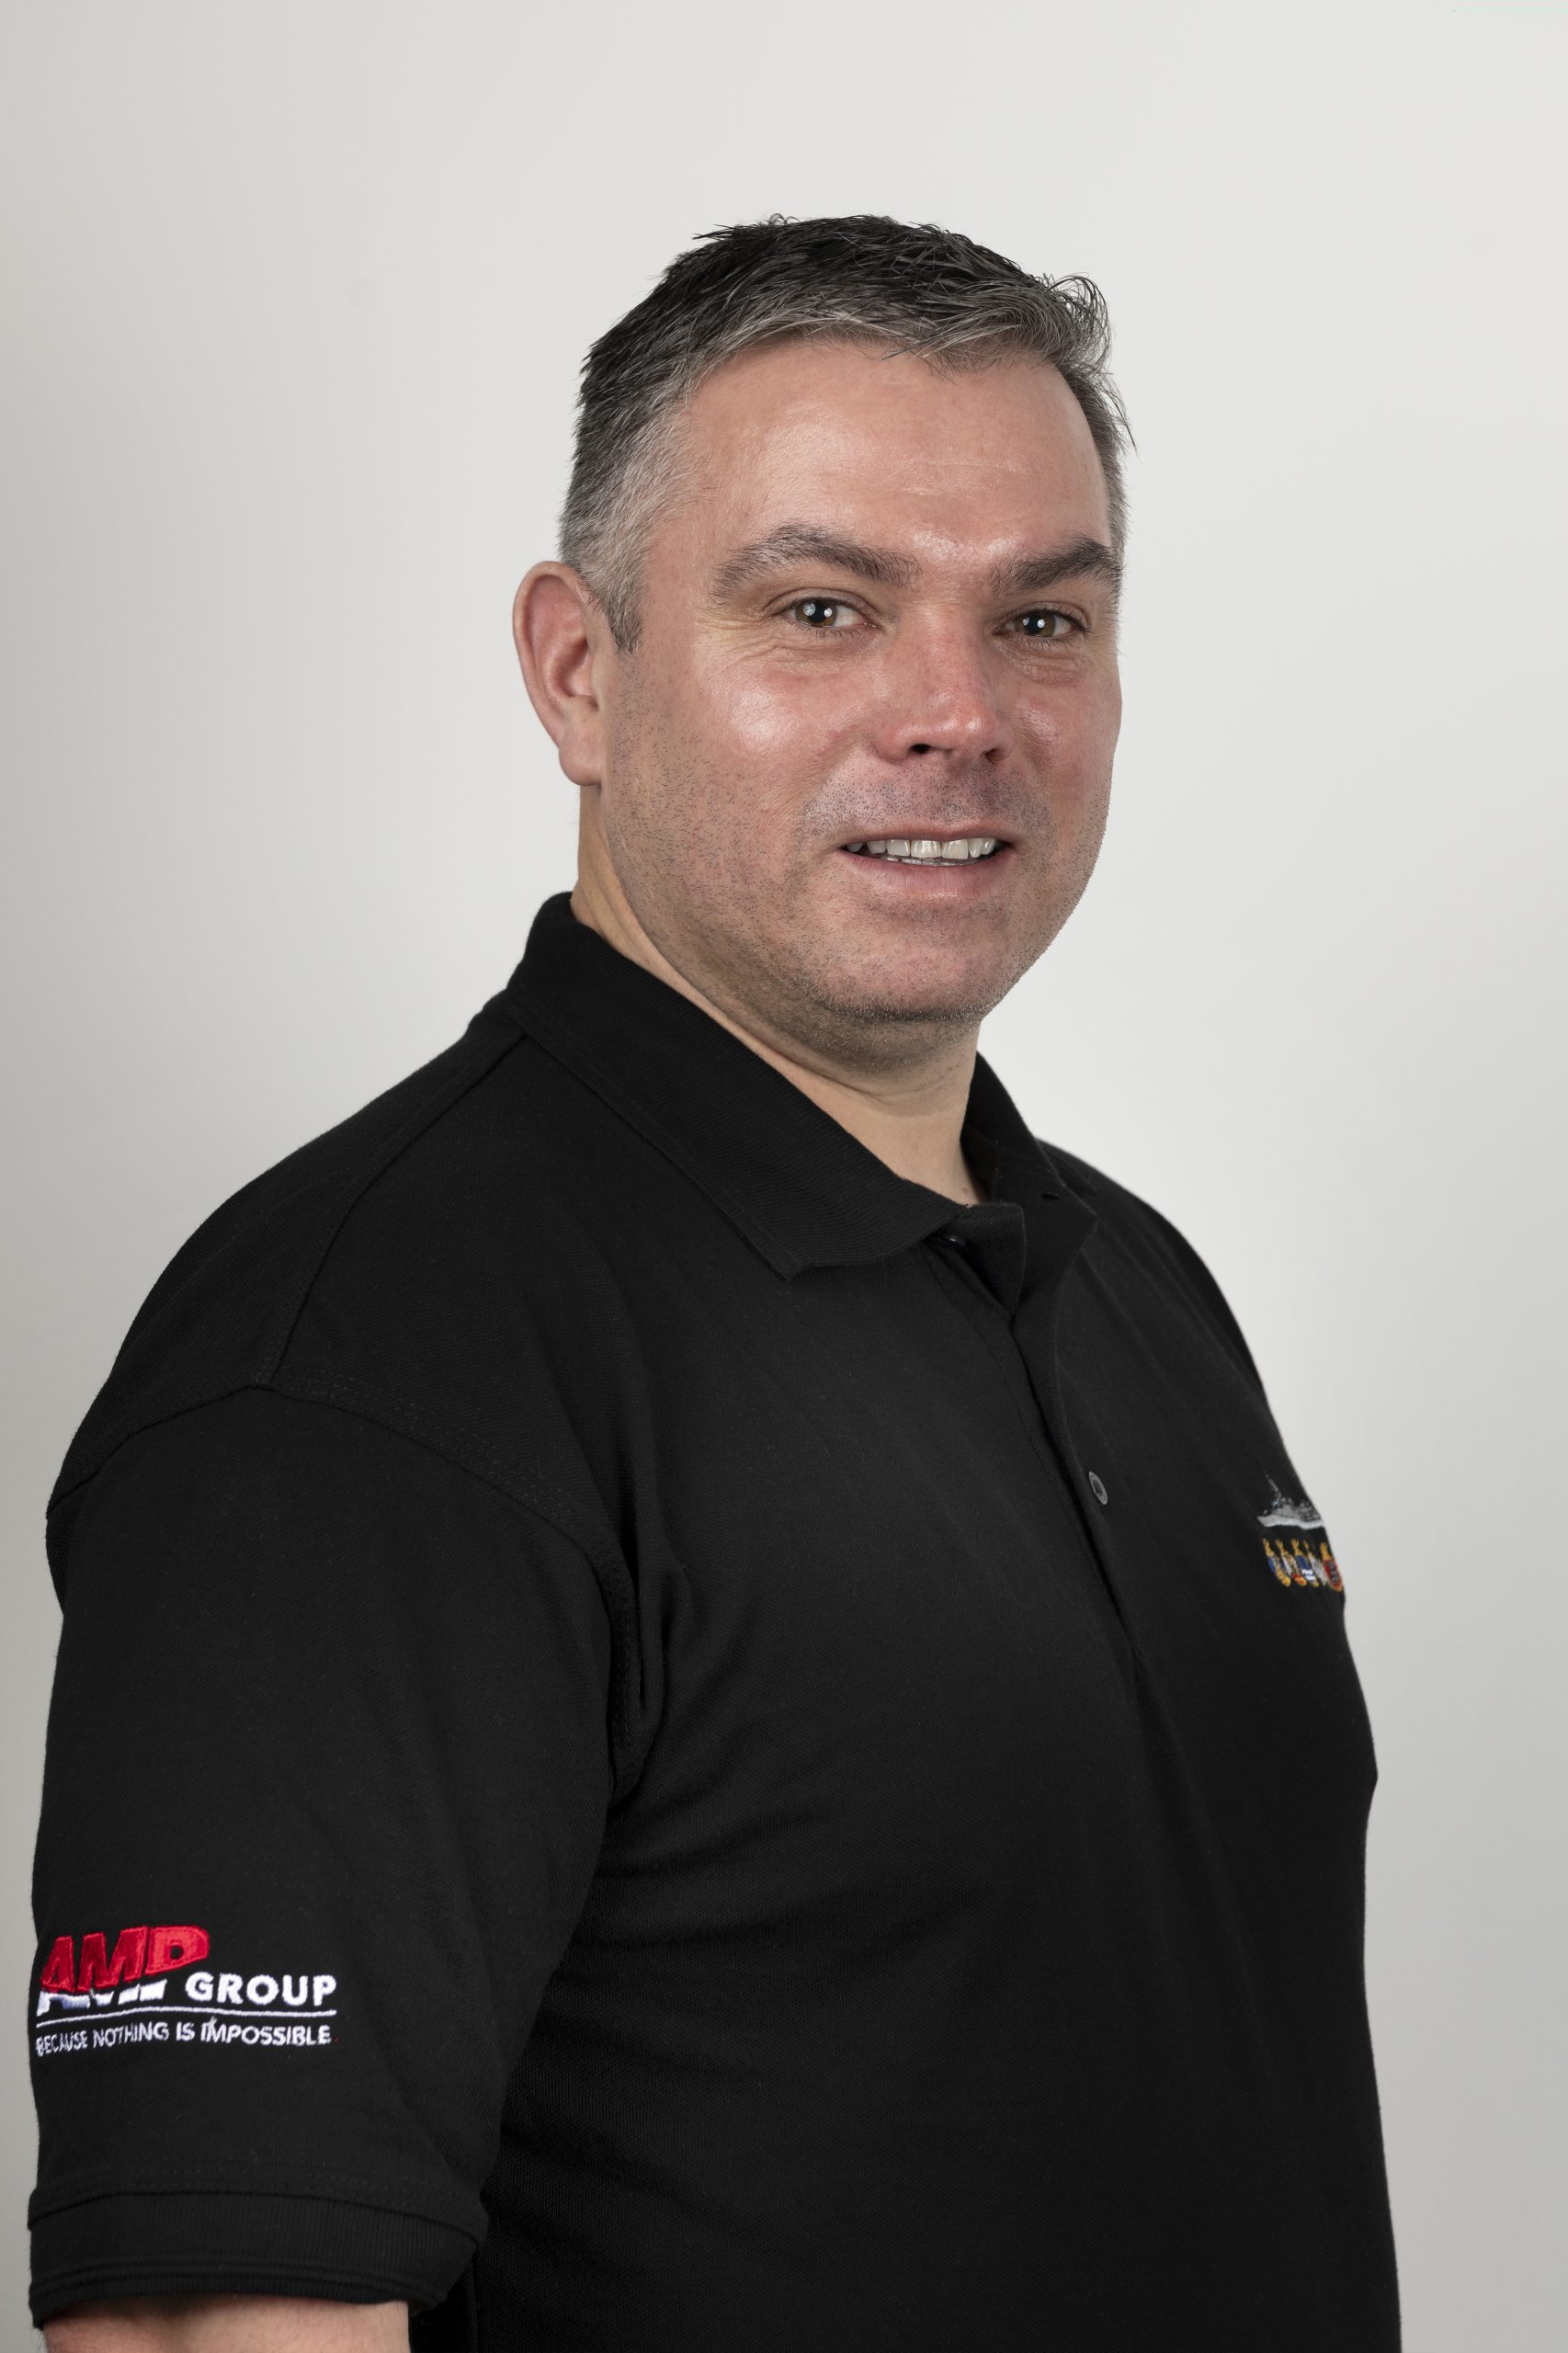 Warehouse & Procurement Technician - Andy Newman, a man in a black polo shirt